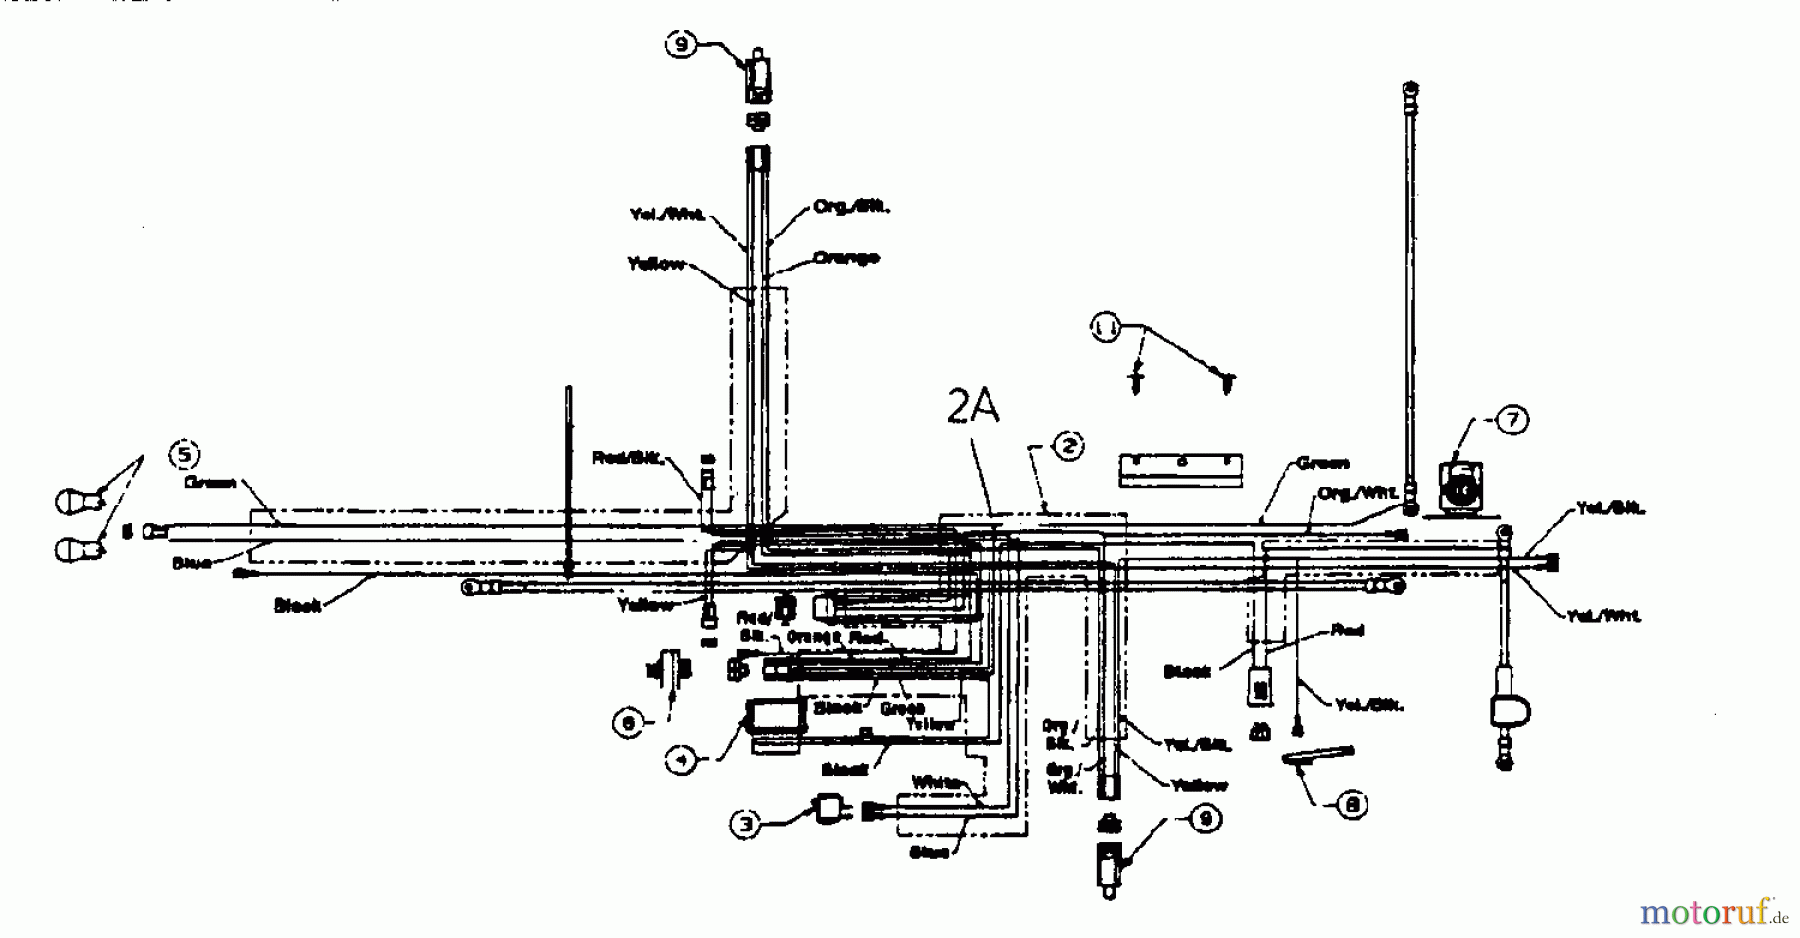  Edenparc Lawn tractors B 145107 13AP675G608  (1999) Wiring diagram for O.H.V.